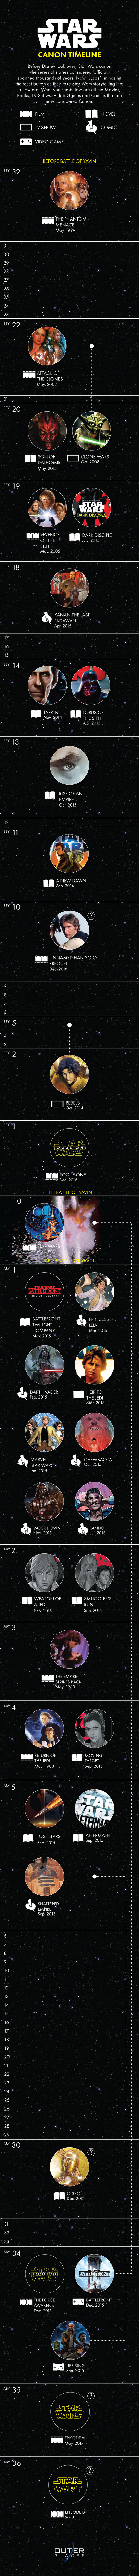 infographic-star-wars-w715_v2